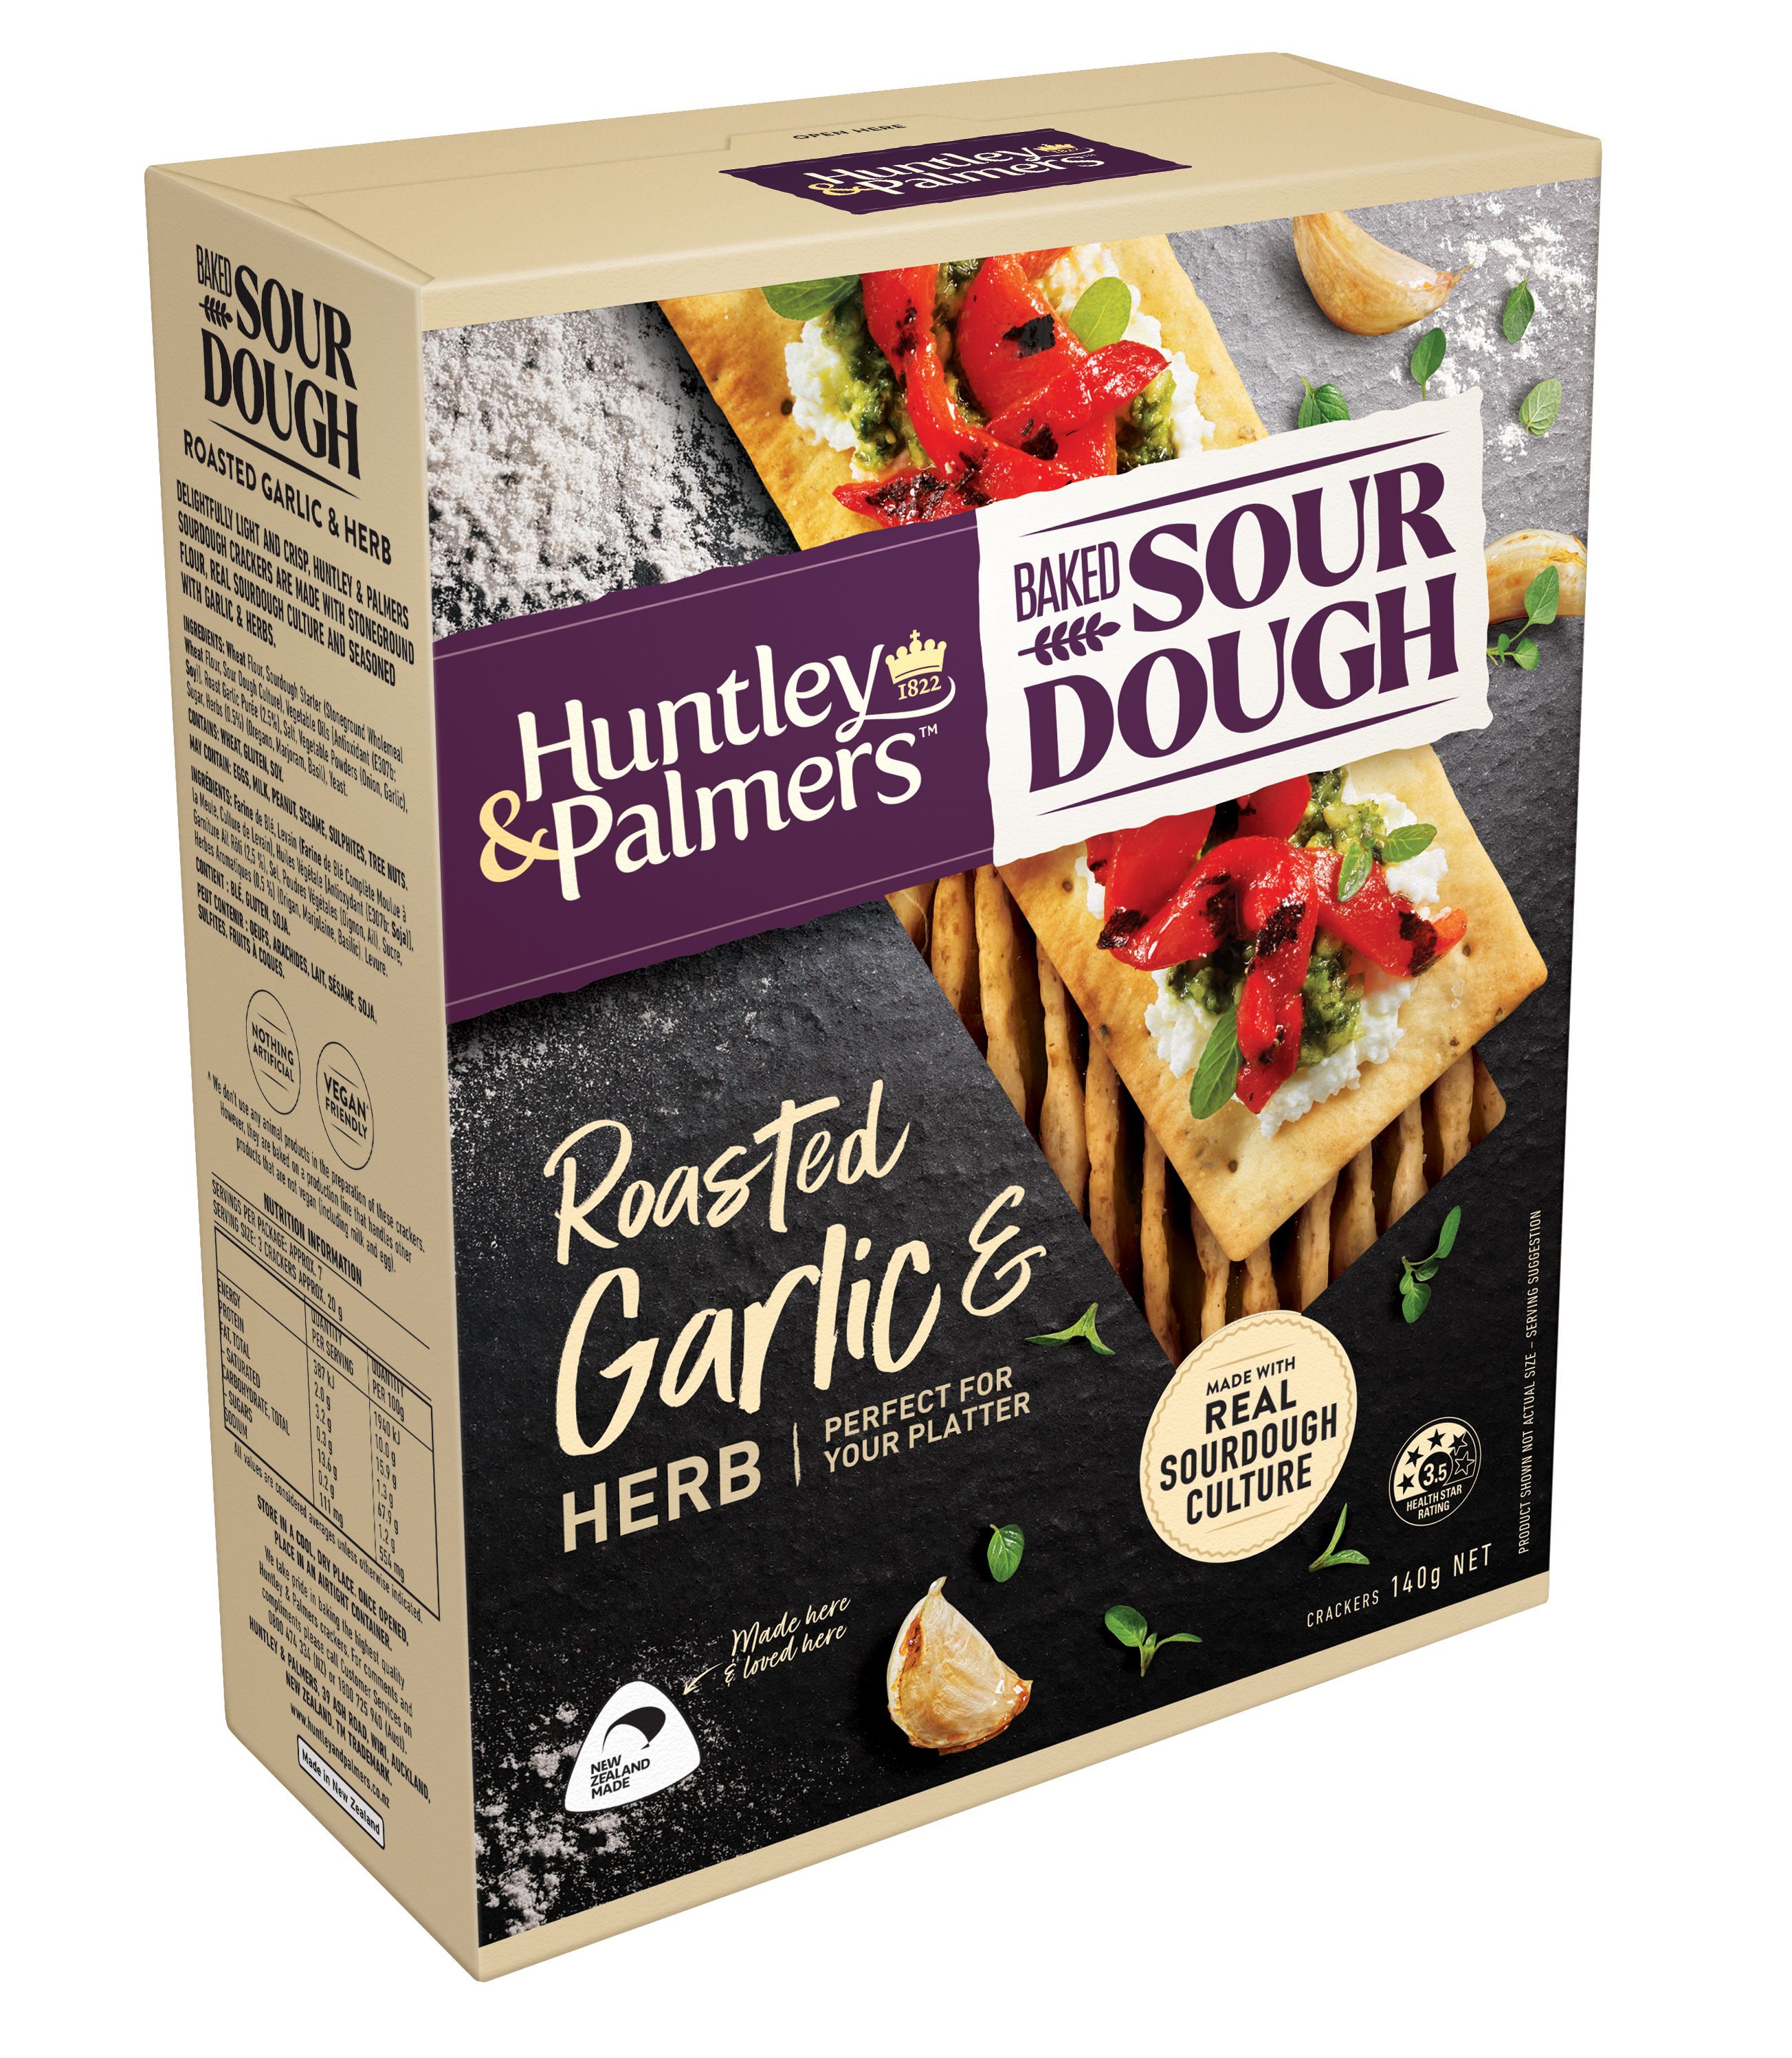 Baked Sourdough Roasted Garlic & Herb